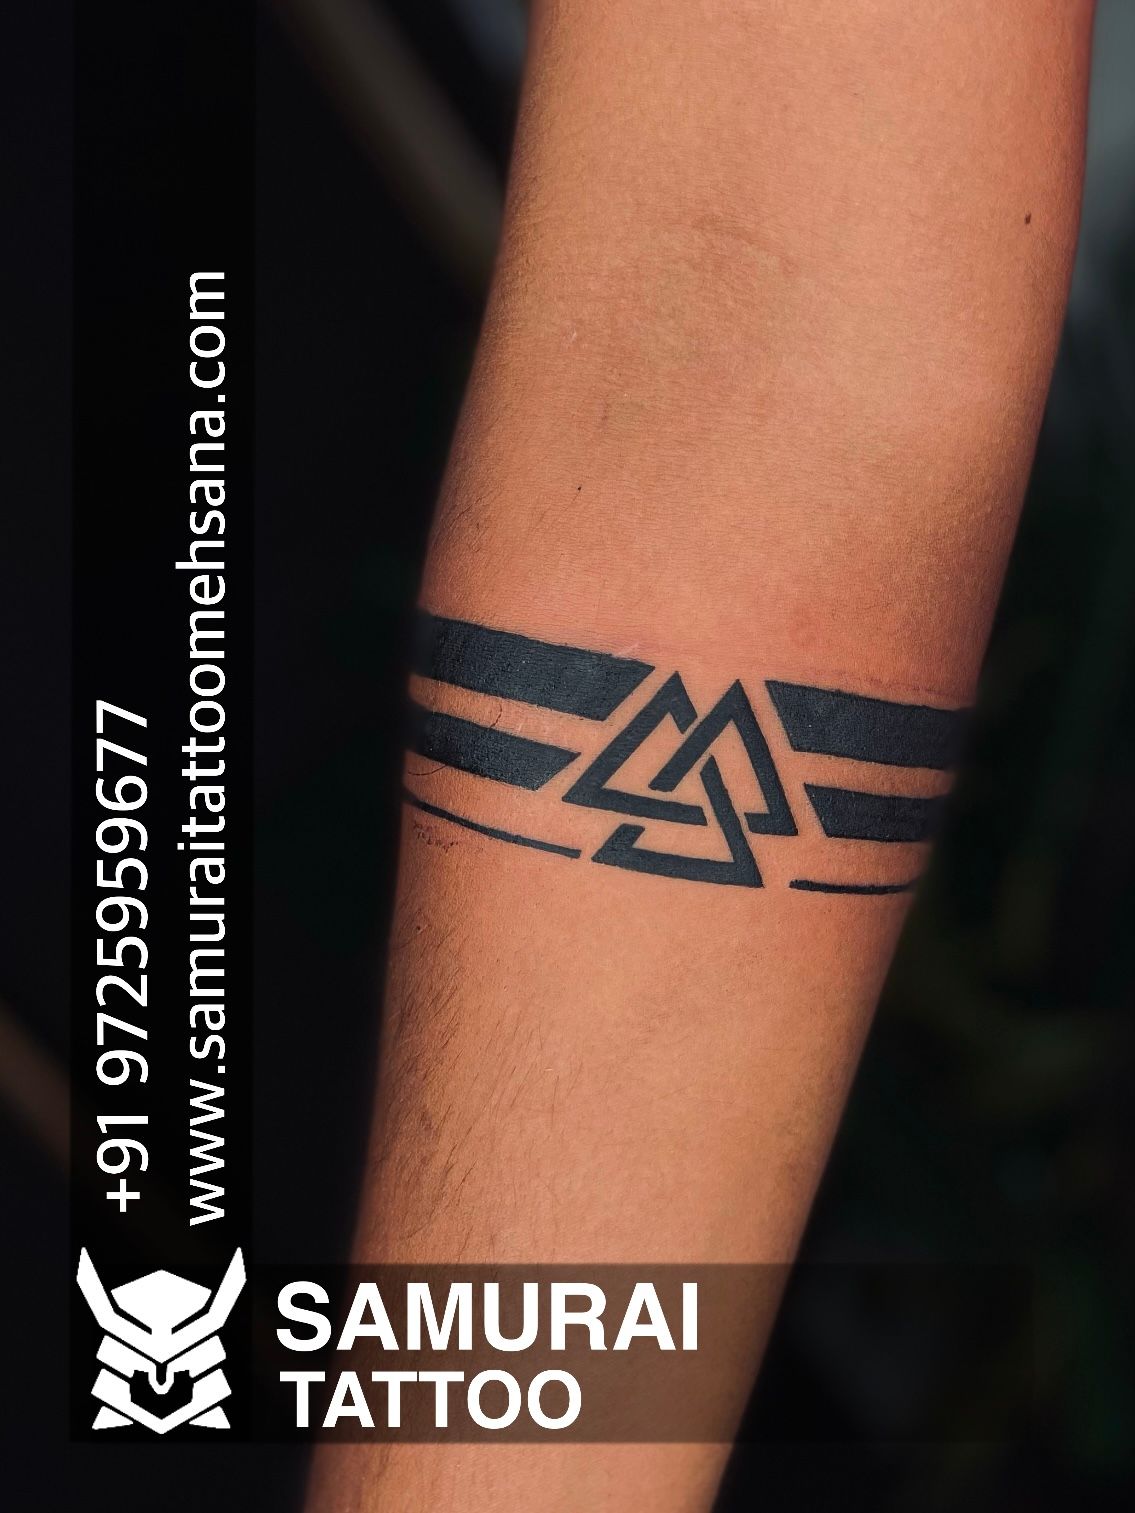 NeedleArt Tattoo Studio - Simple band tattoo design on girl's hand ! |  Facebook